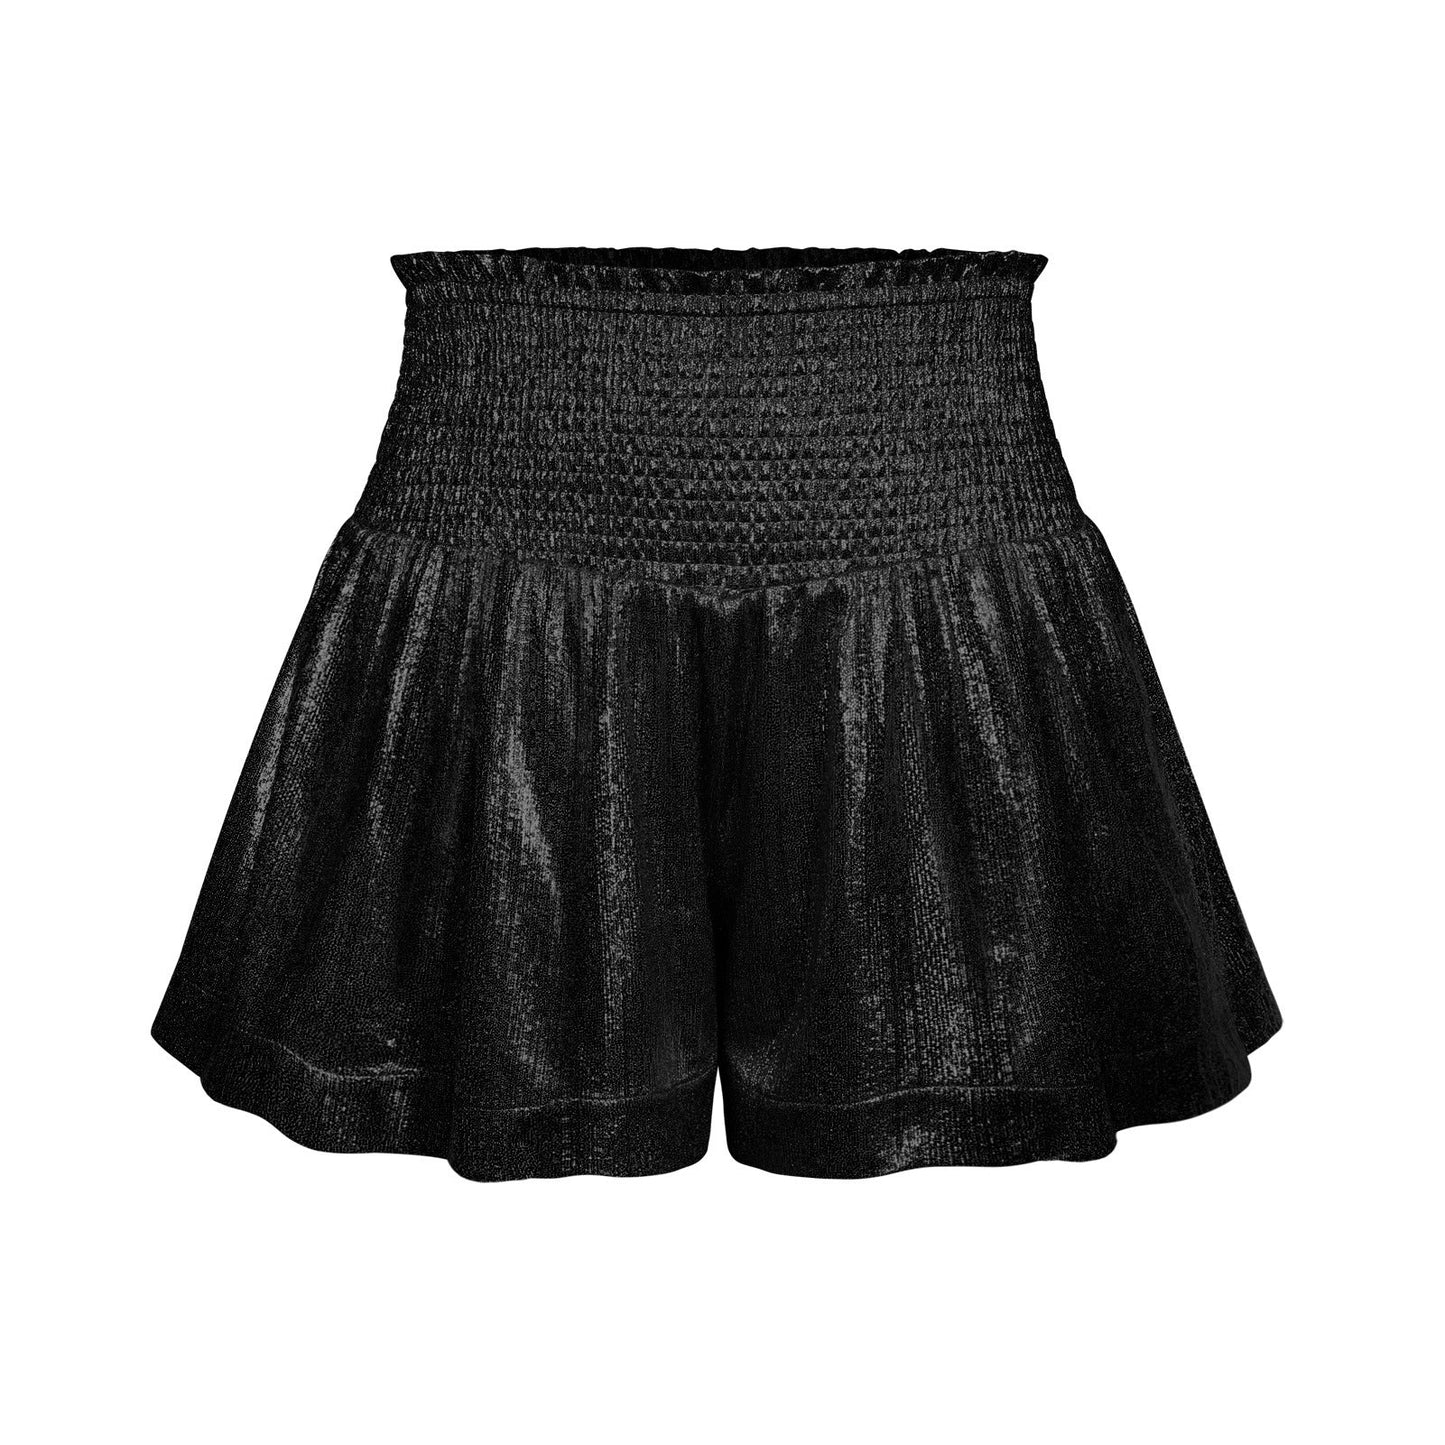 Casual Shinning Elastic Waist Summer Women Shorts-Shorts-EKDA010-黑底银-S-Free Shipping Leatheretro